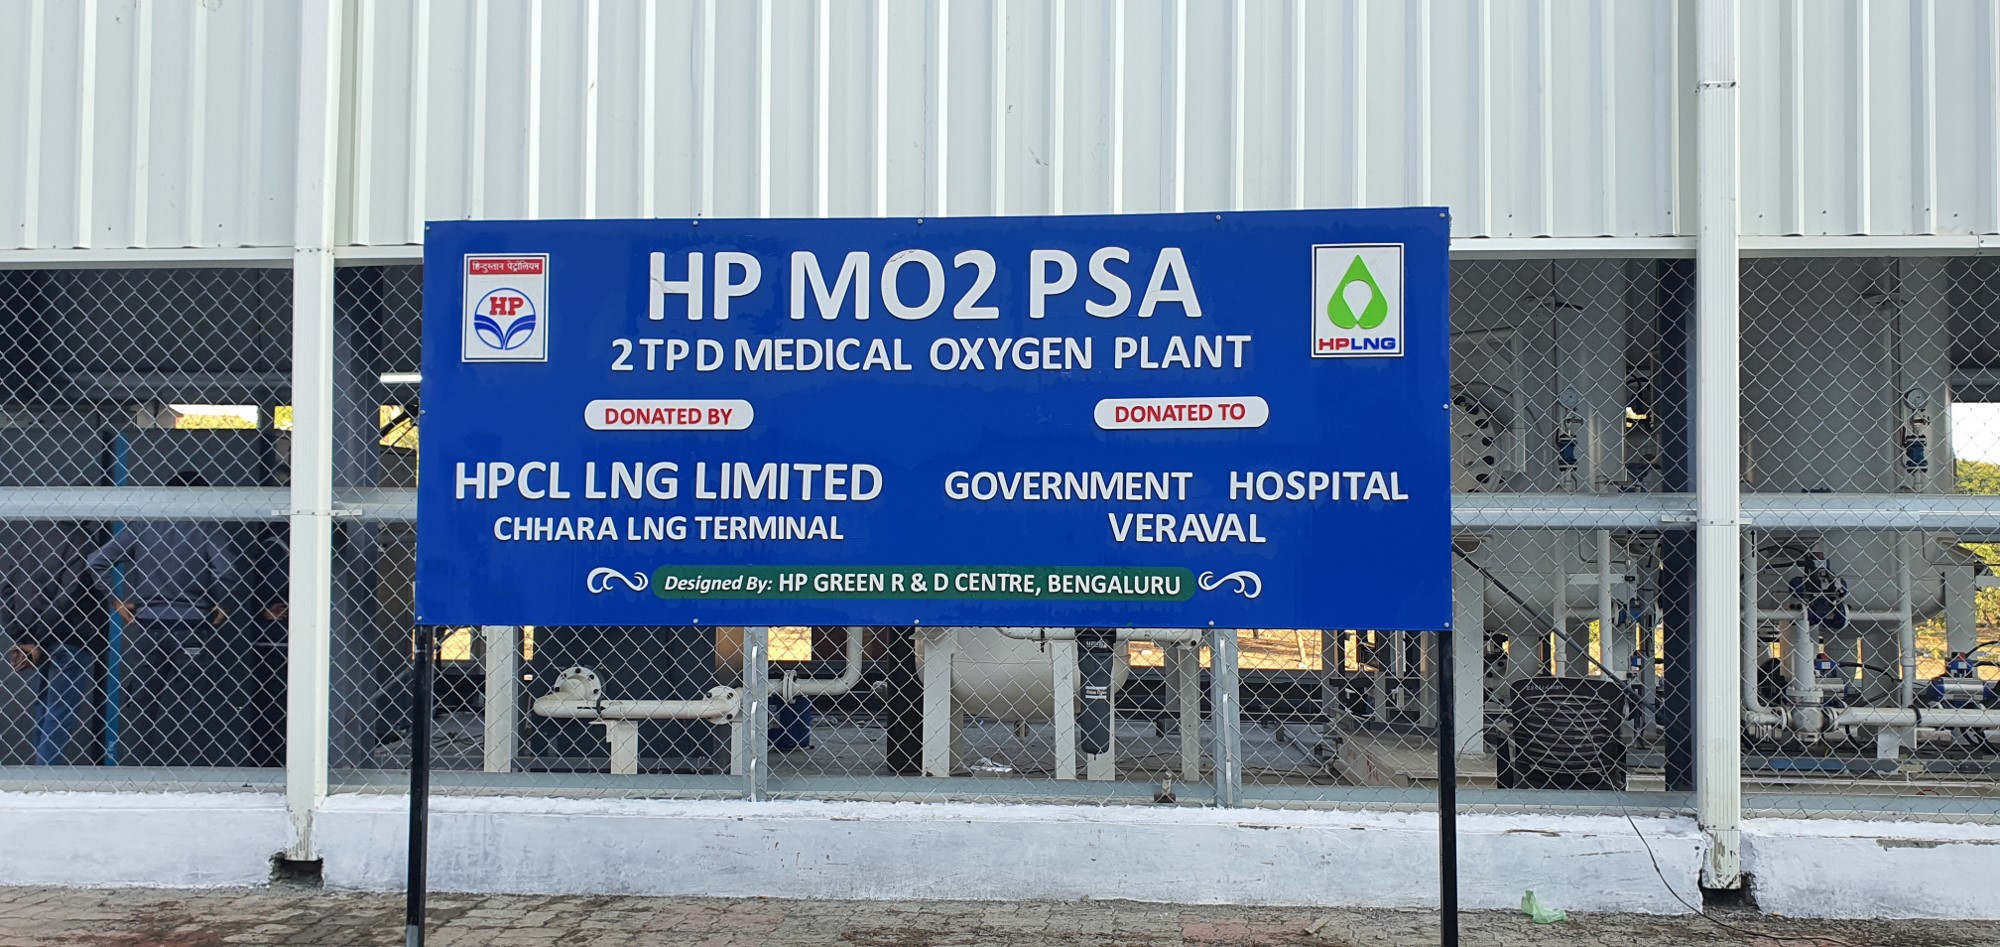 2 TPD Medical Oxygen Plant set up at Government Hospital Veraval